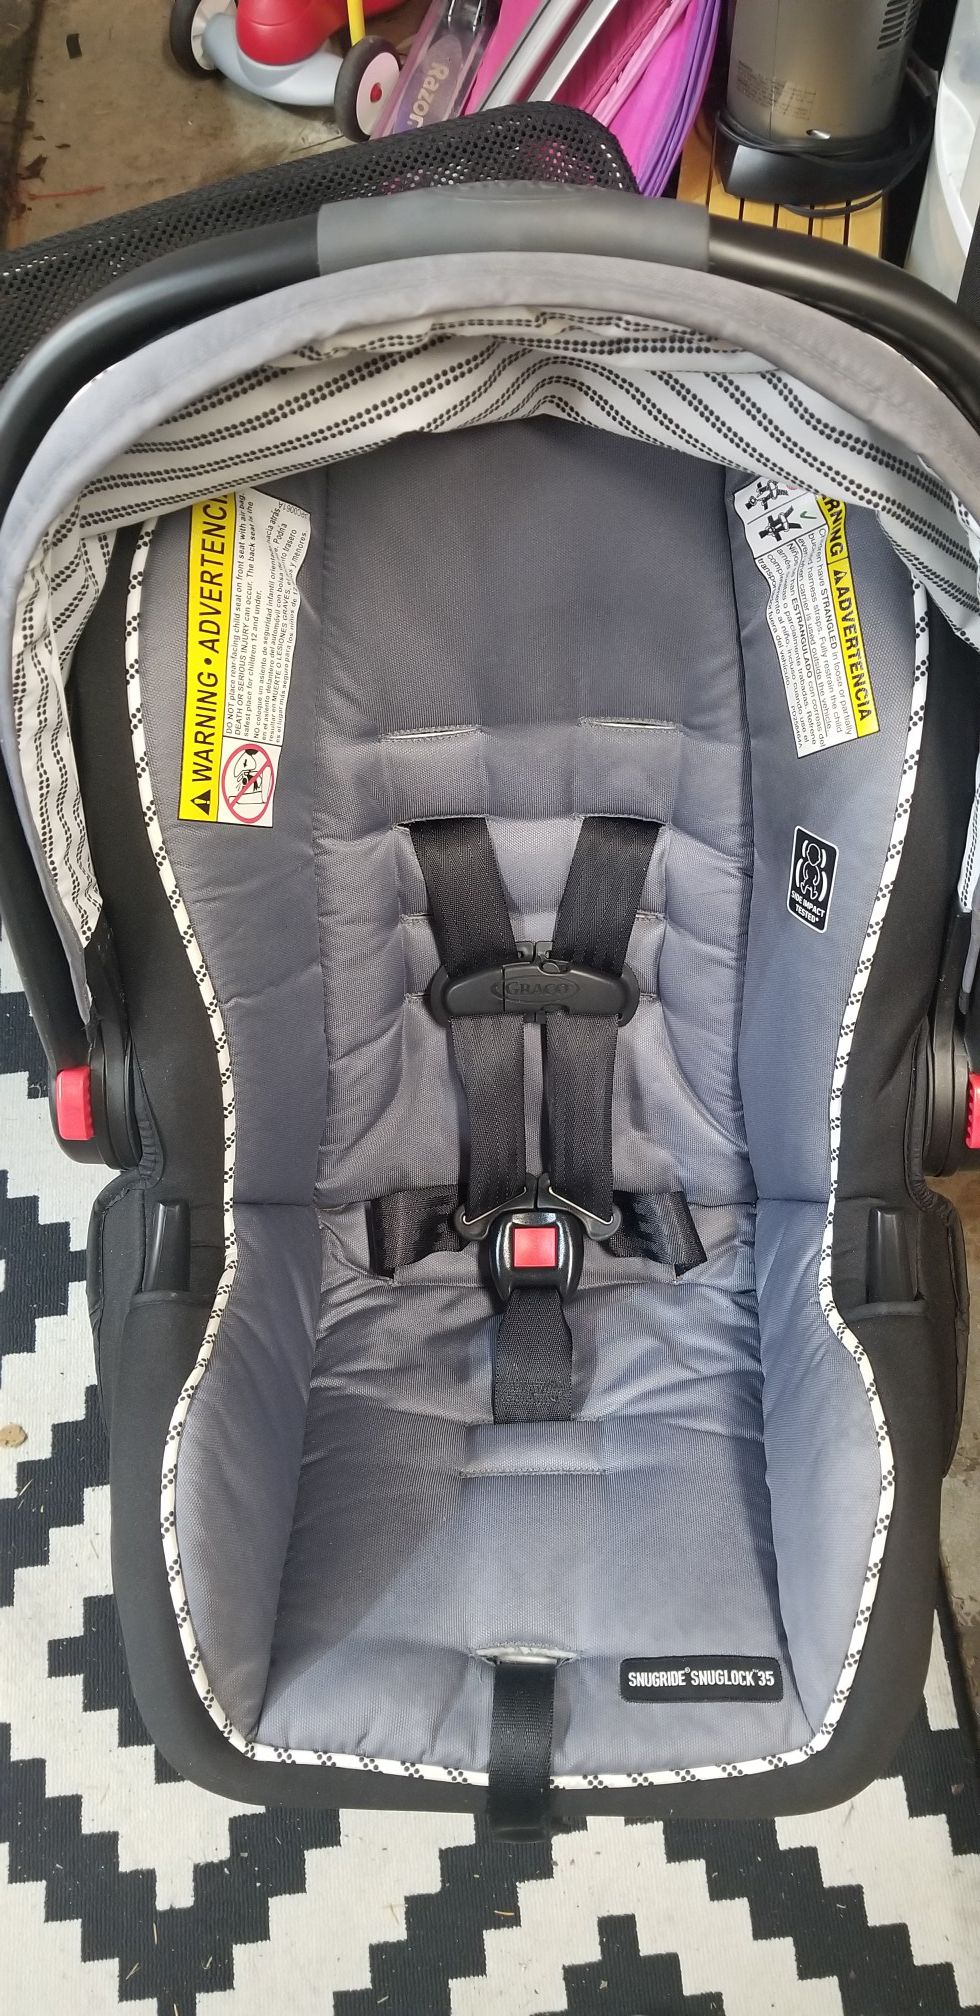 Graco Children's car seat